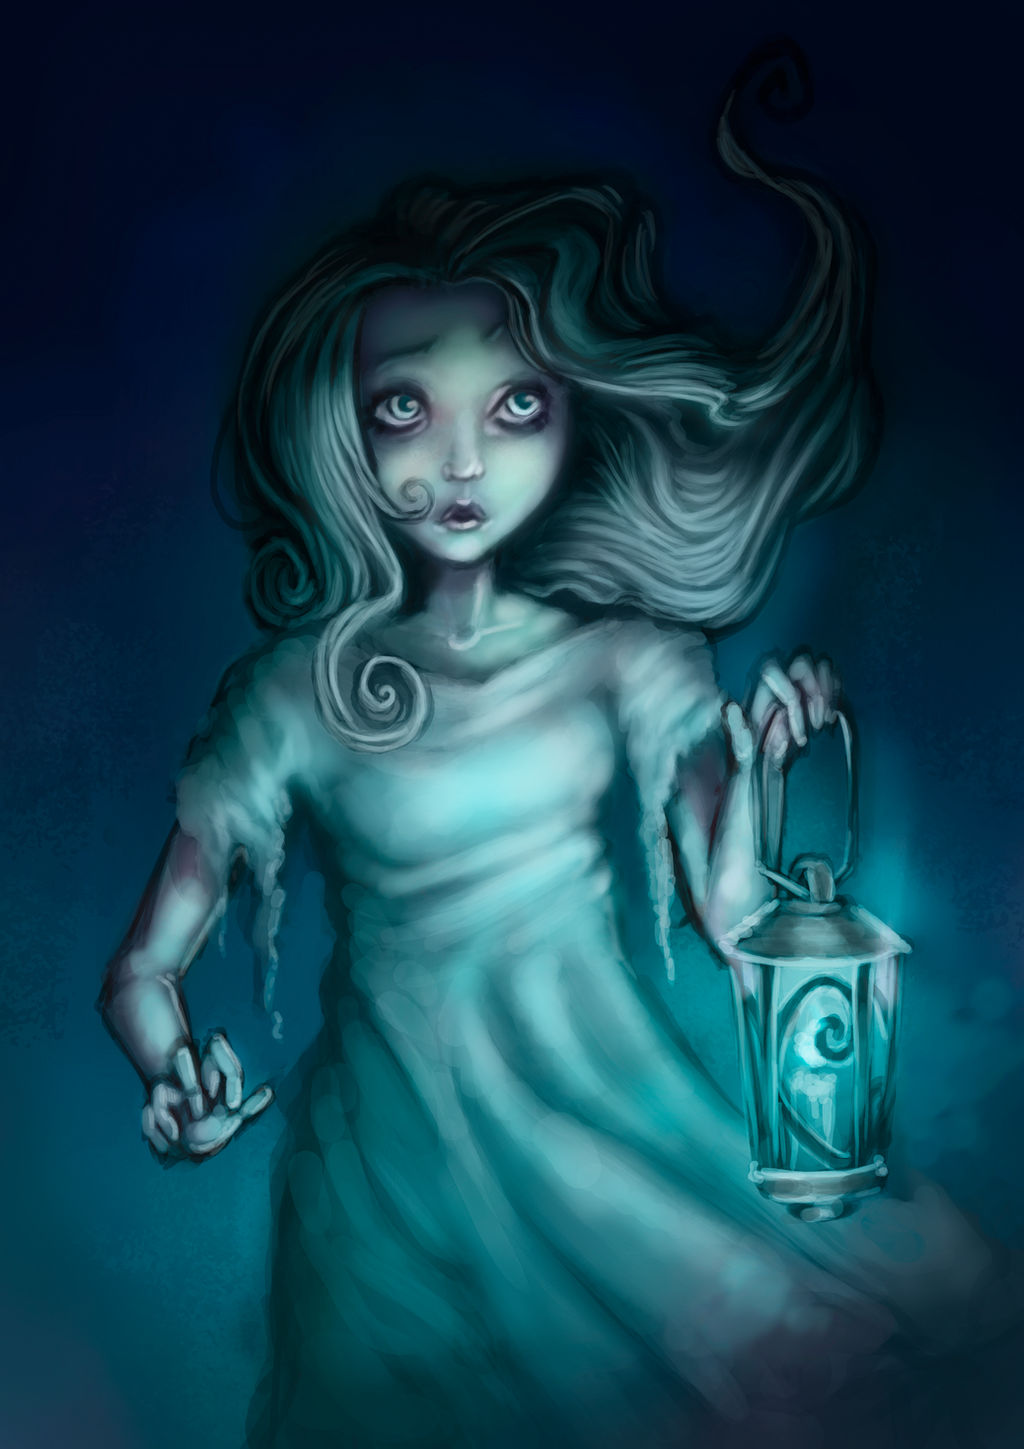 20160404 Ghost Girl Illustration By Timvanwyns On Deviantart